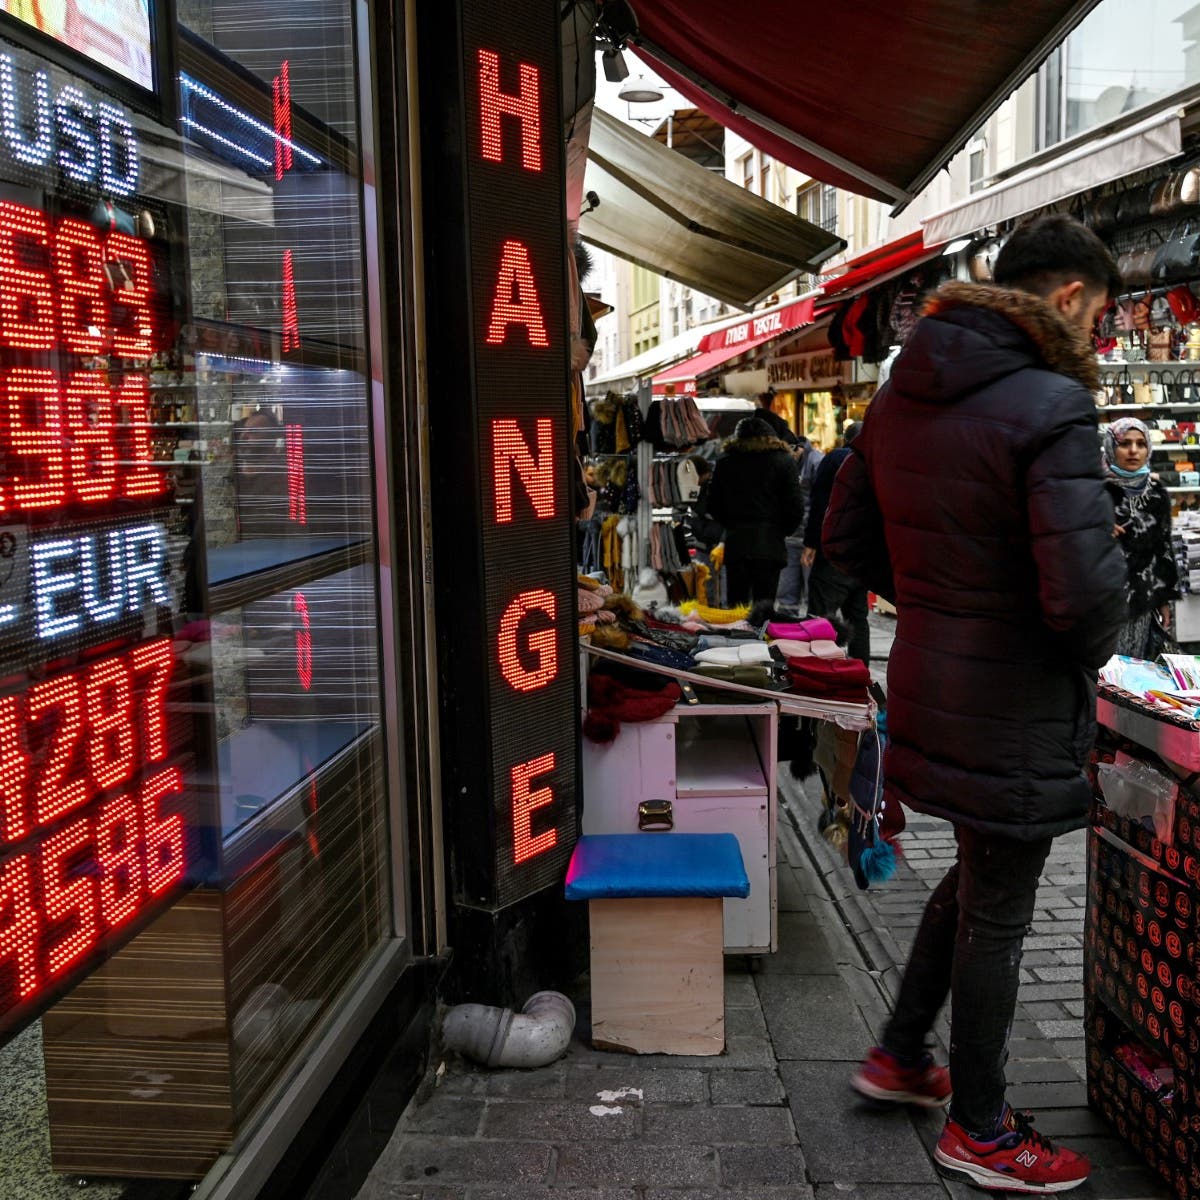 Turkey’s Erdogan stays firm on interest rates, lira weakens four percent